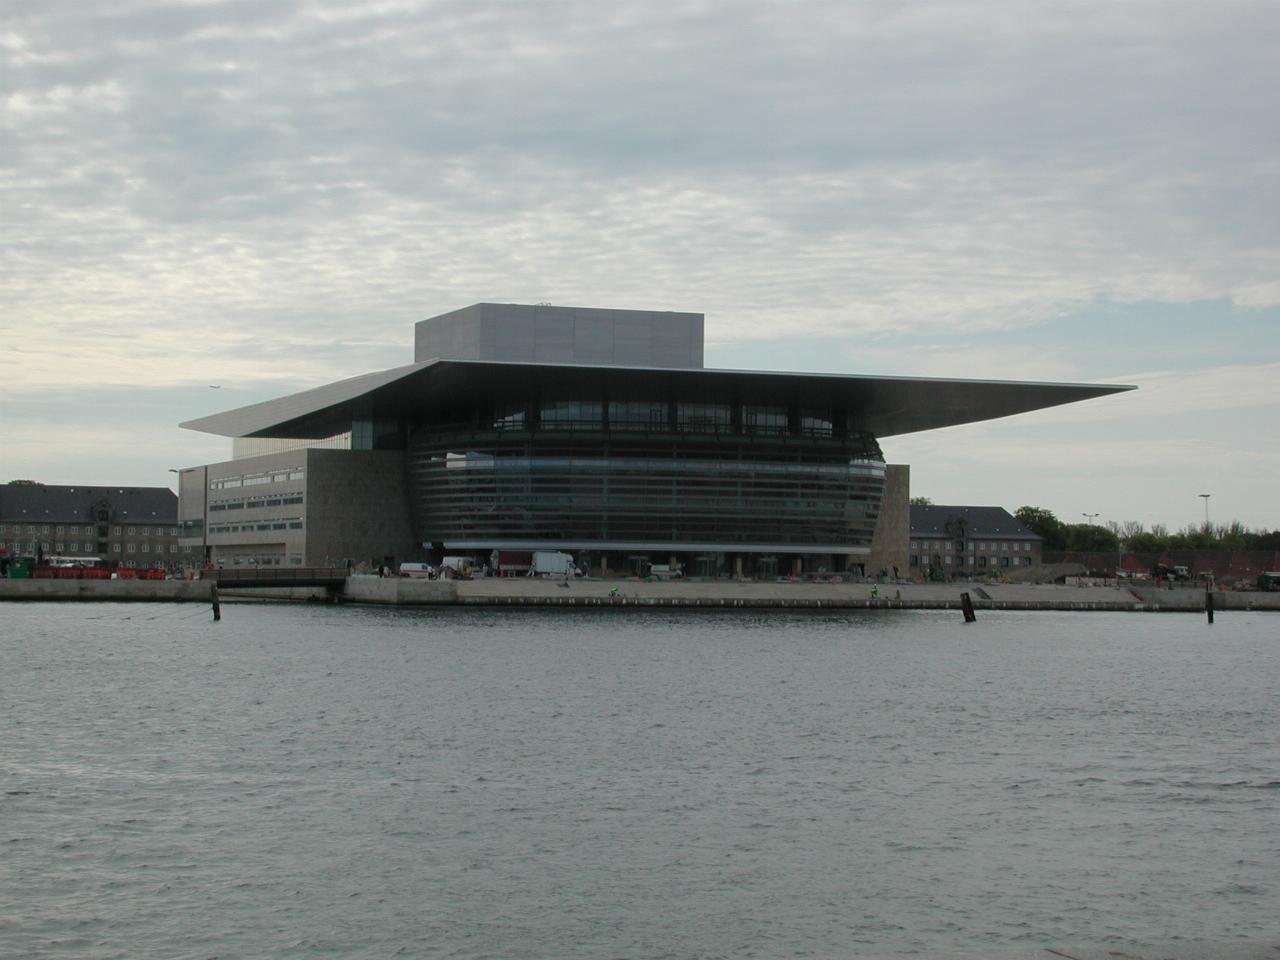 KPLU Viking Jazz: New Copenhagen Opera House, gift from Mærsk, under construction